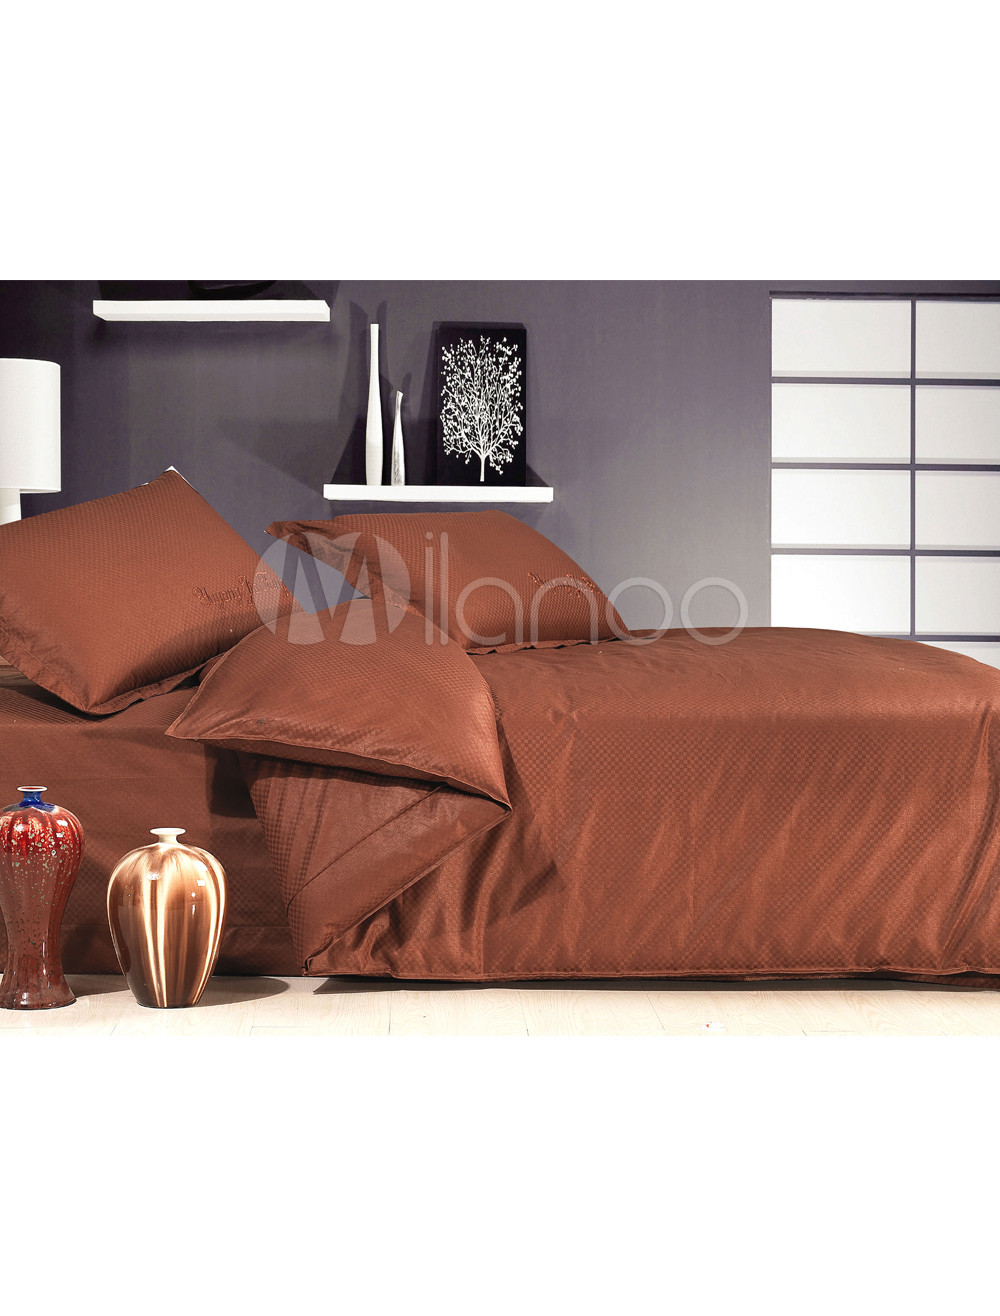 4-pc Beautiful Brown Silk Quilt Duvet Cover Bedding Set